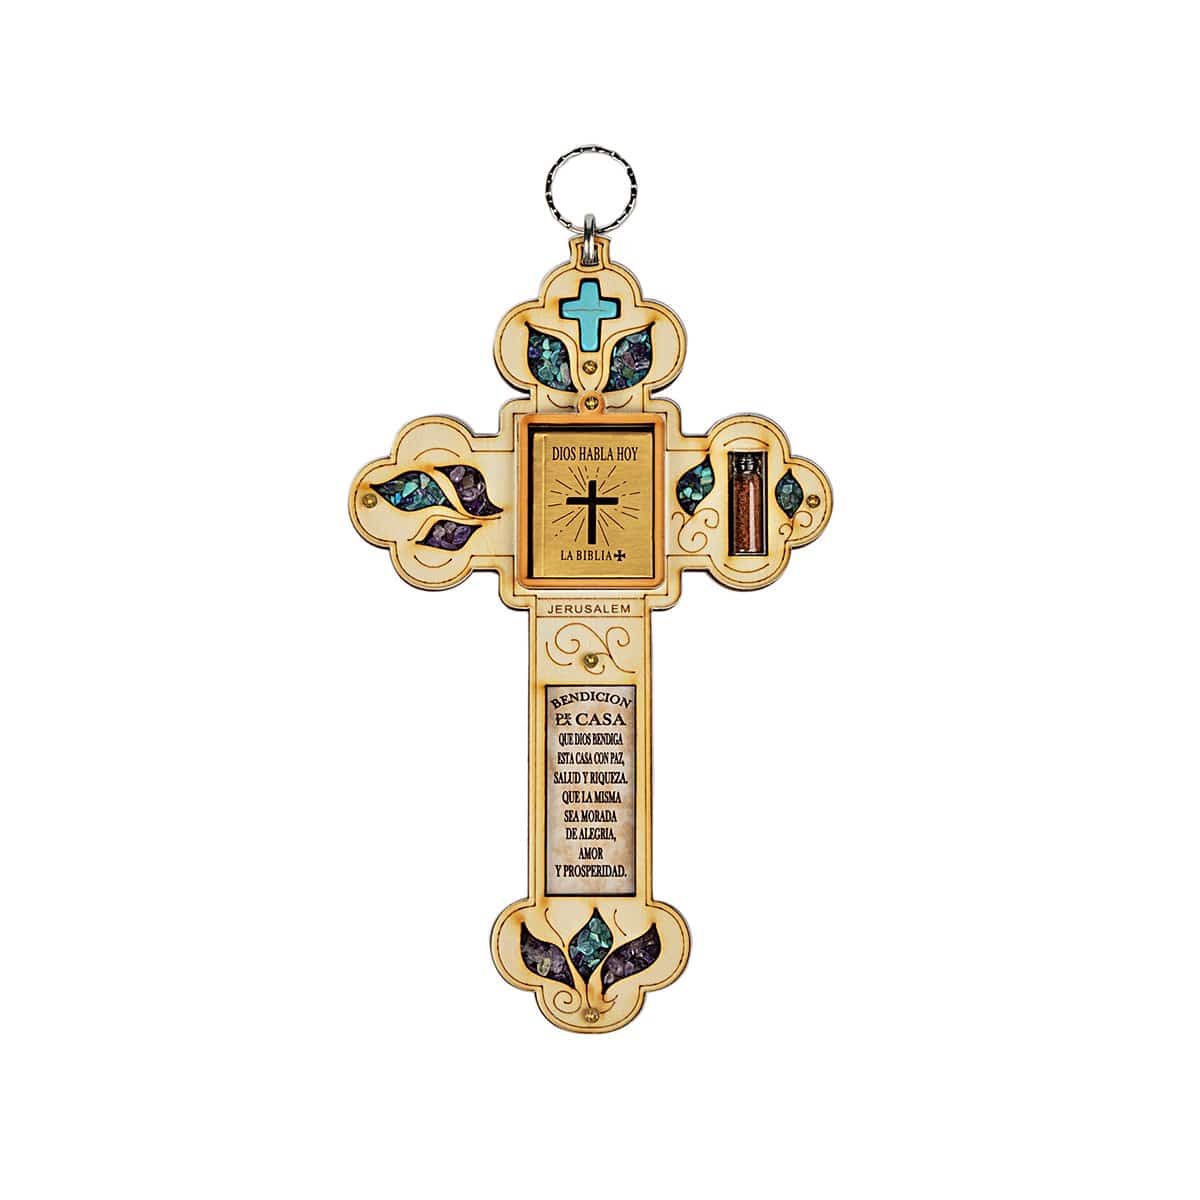 christianity cross symbol